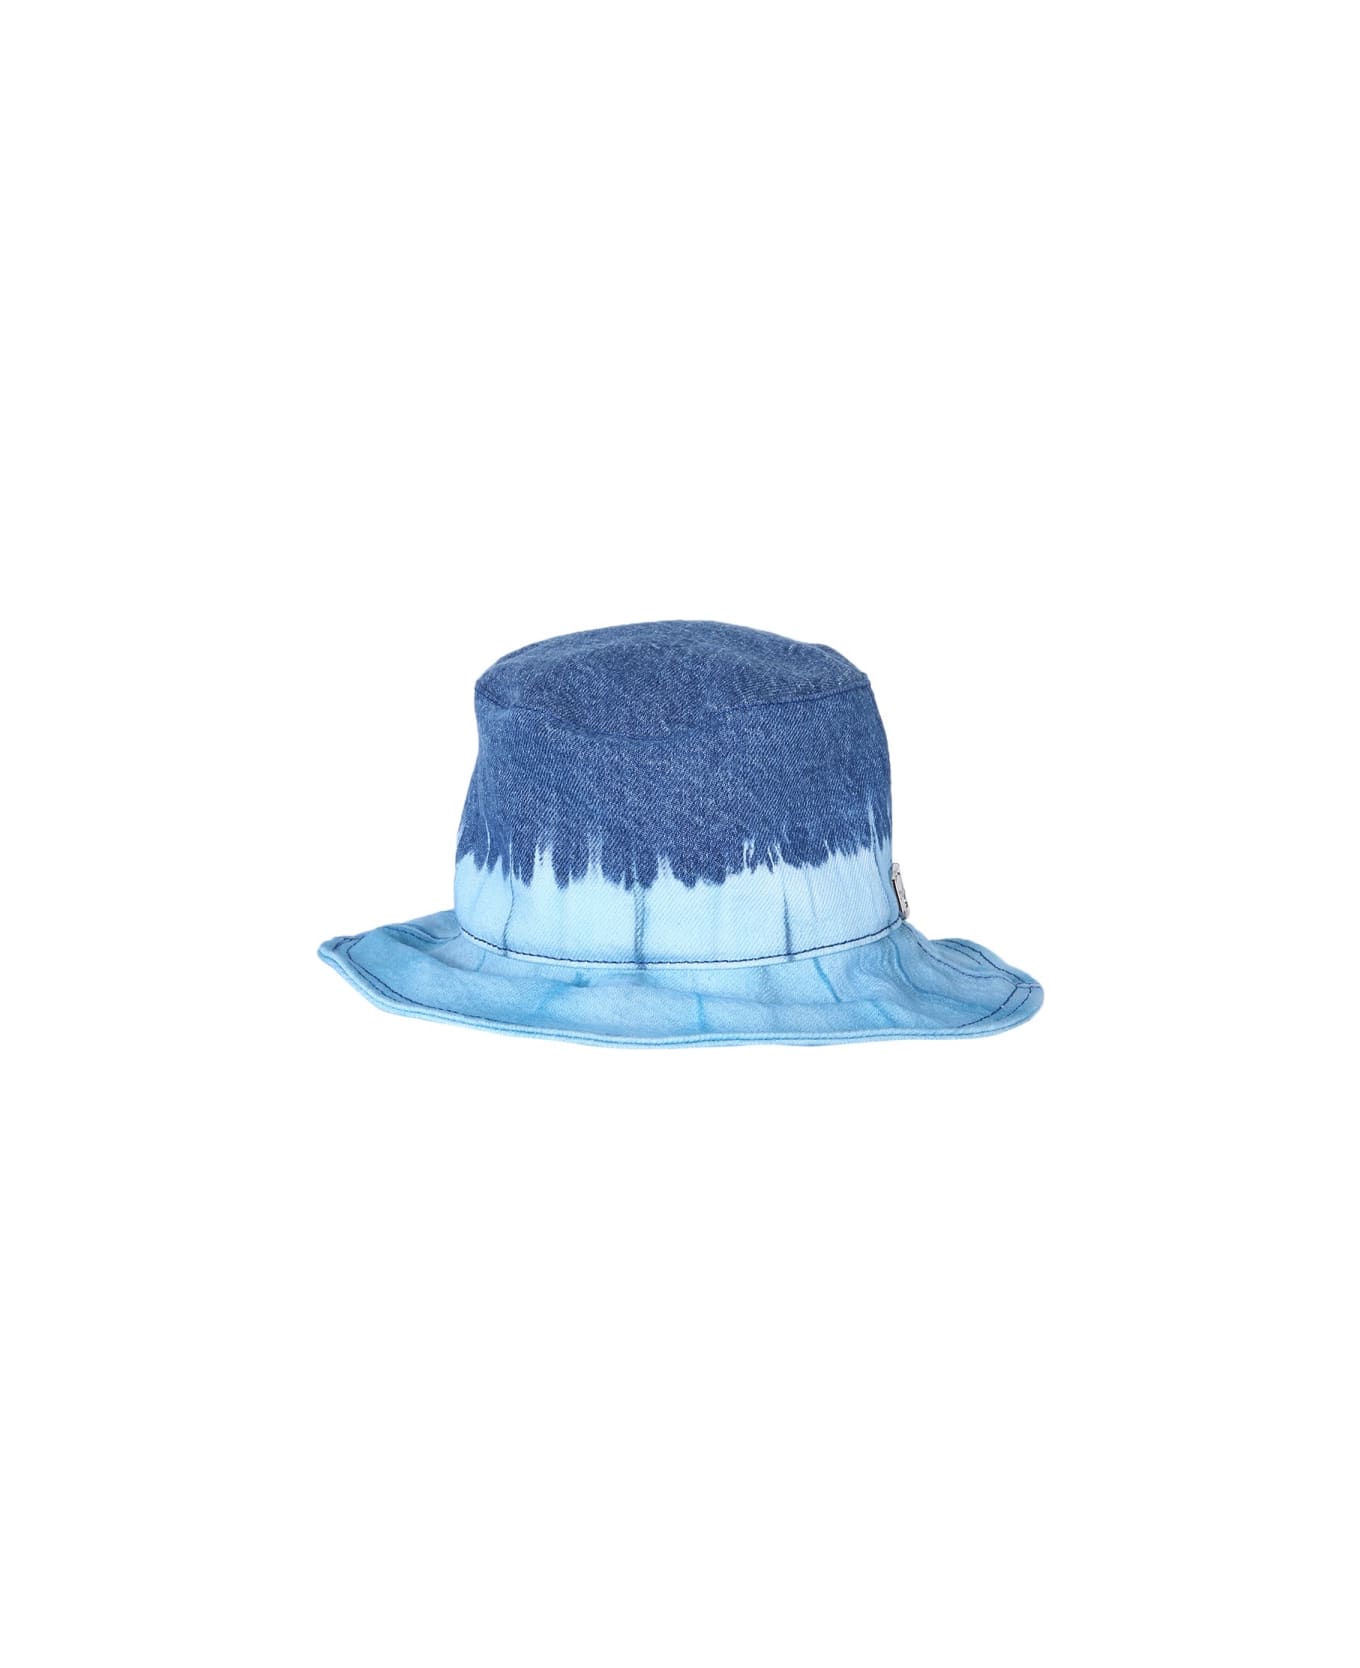 Alberta Ferretti Bucket Hat With Tie Dye Print - BLUE